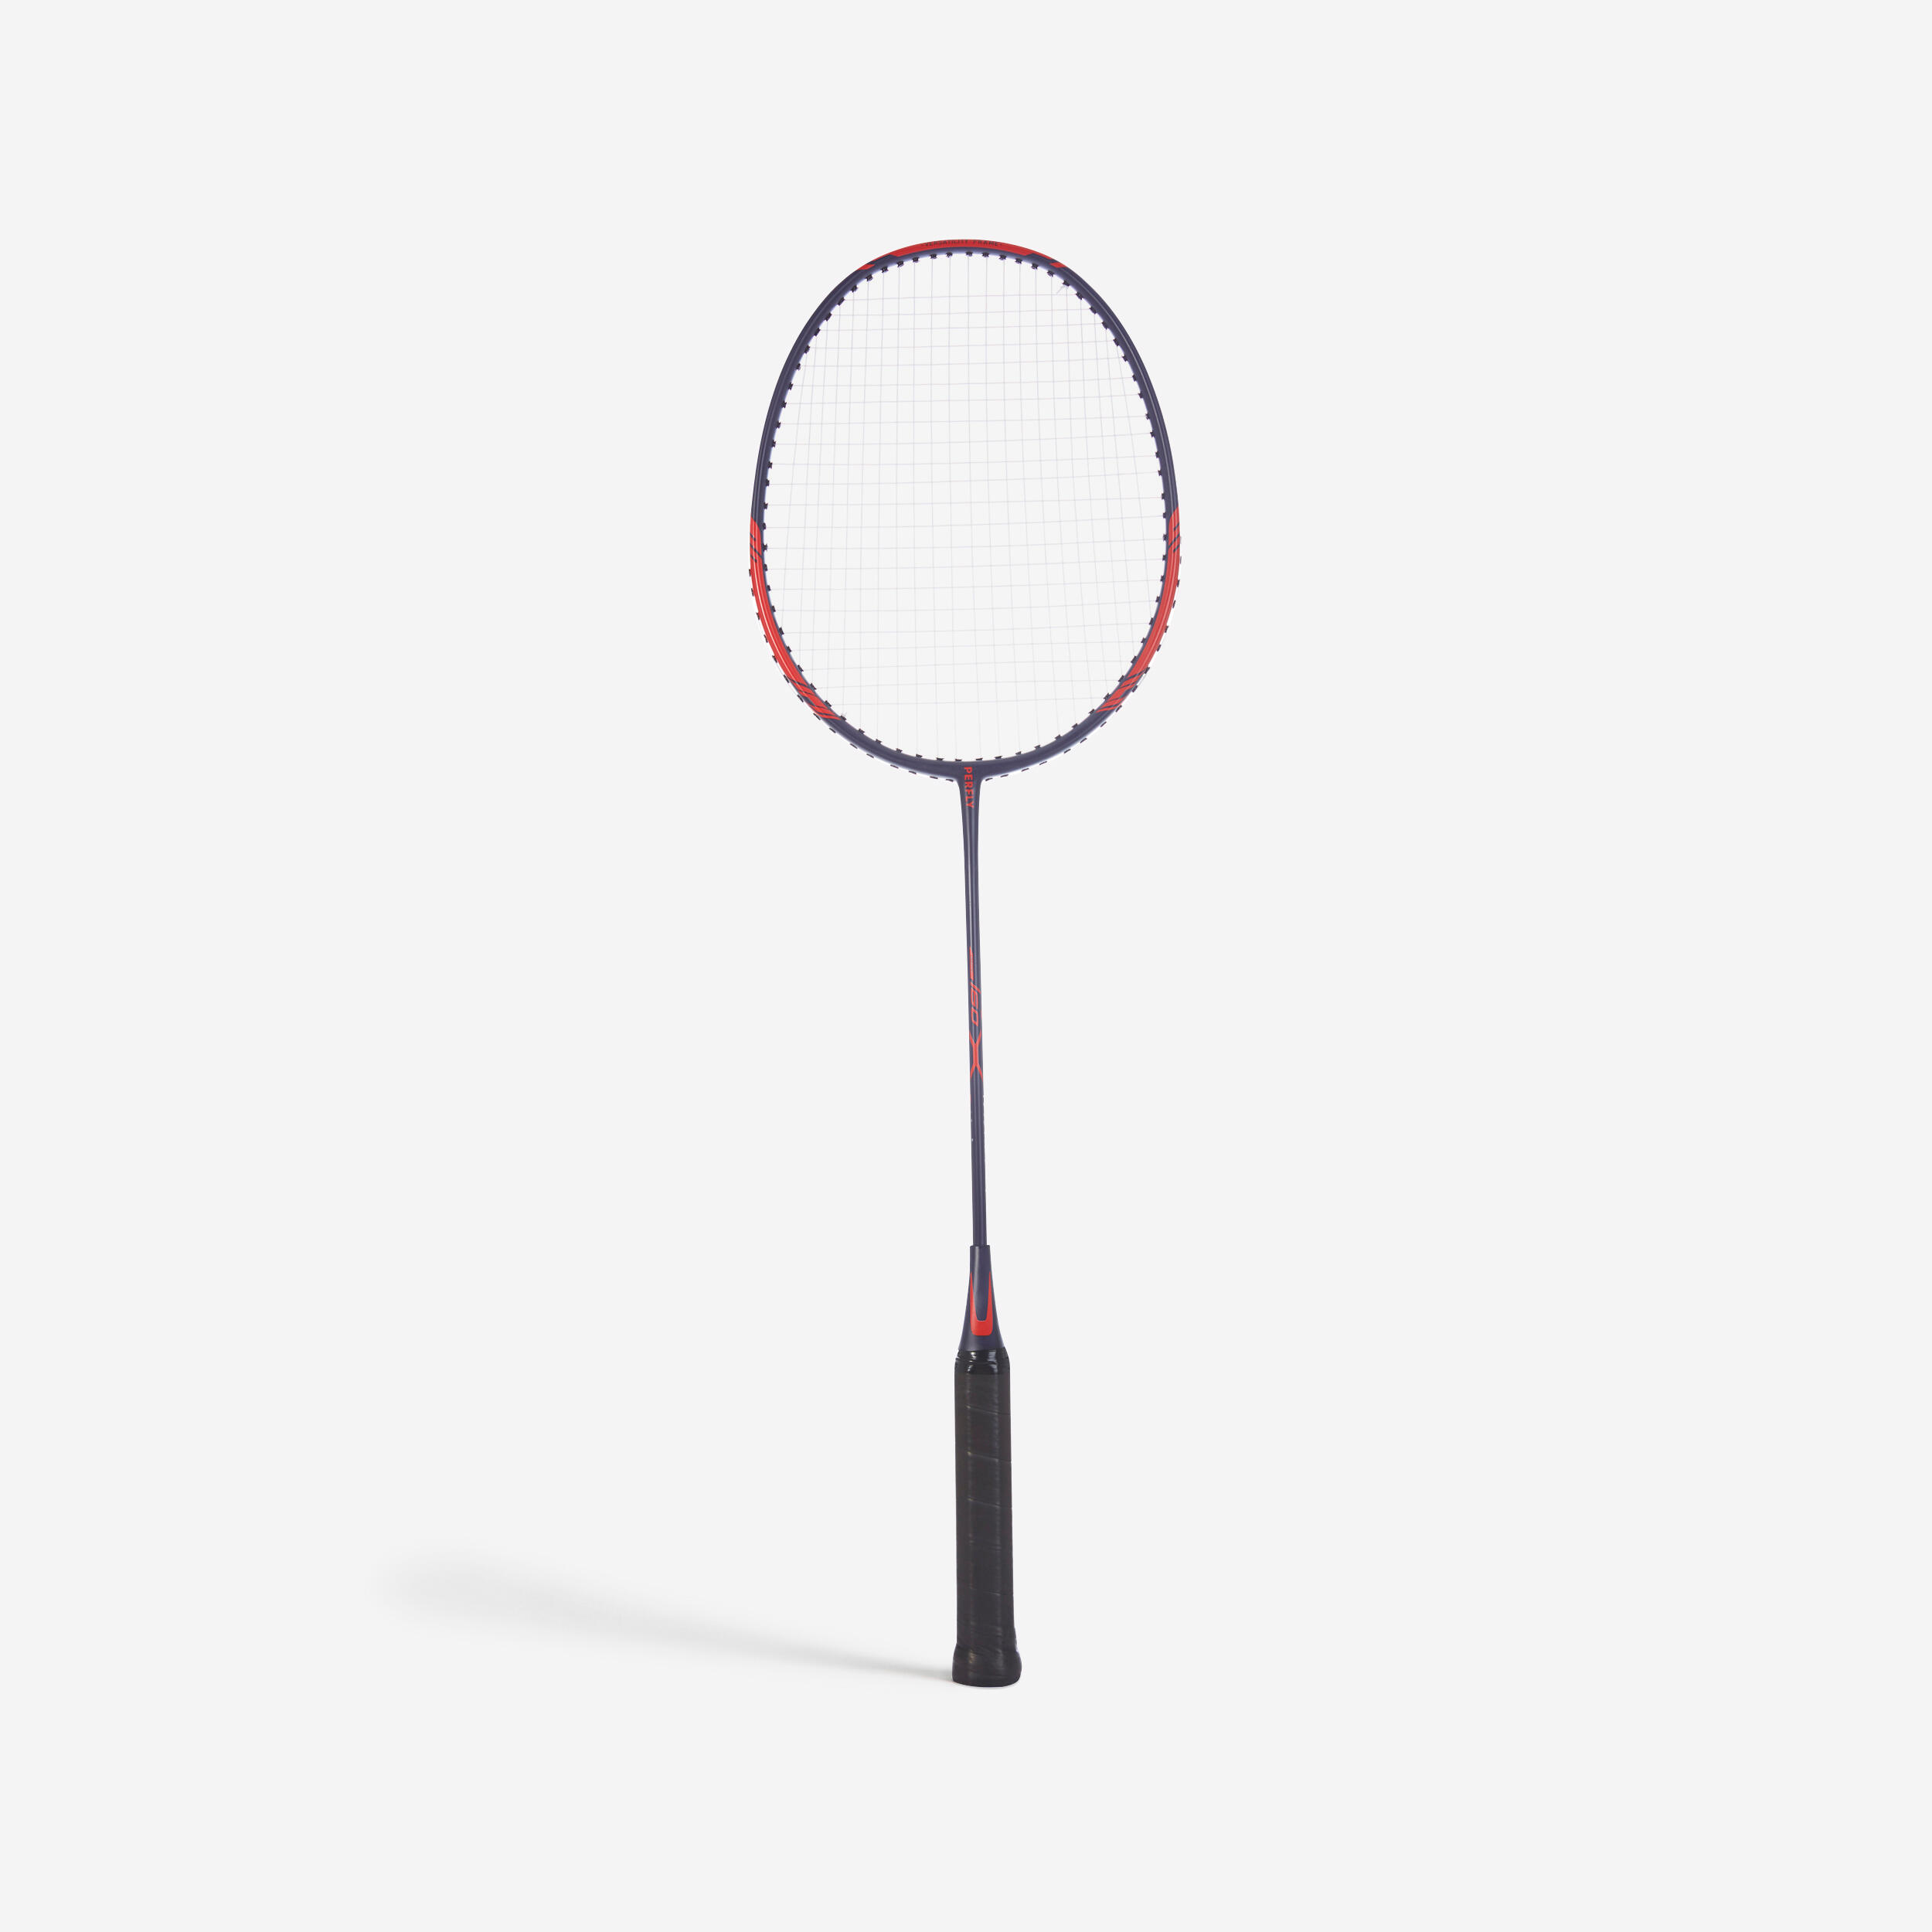 Decathlon | Racchetta badminton adulto BR 160 blu |  Perfly